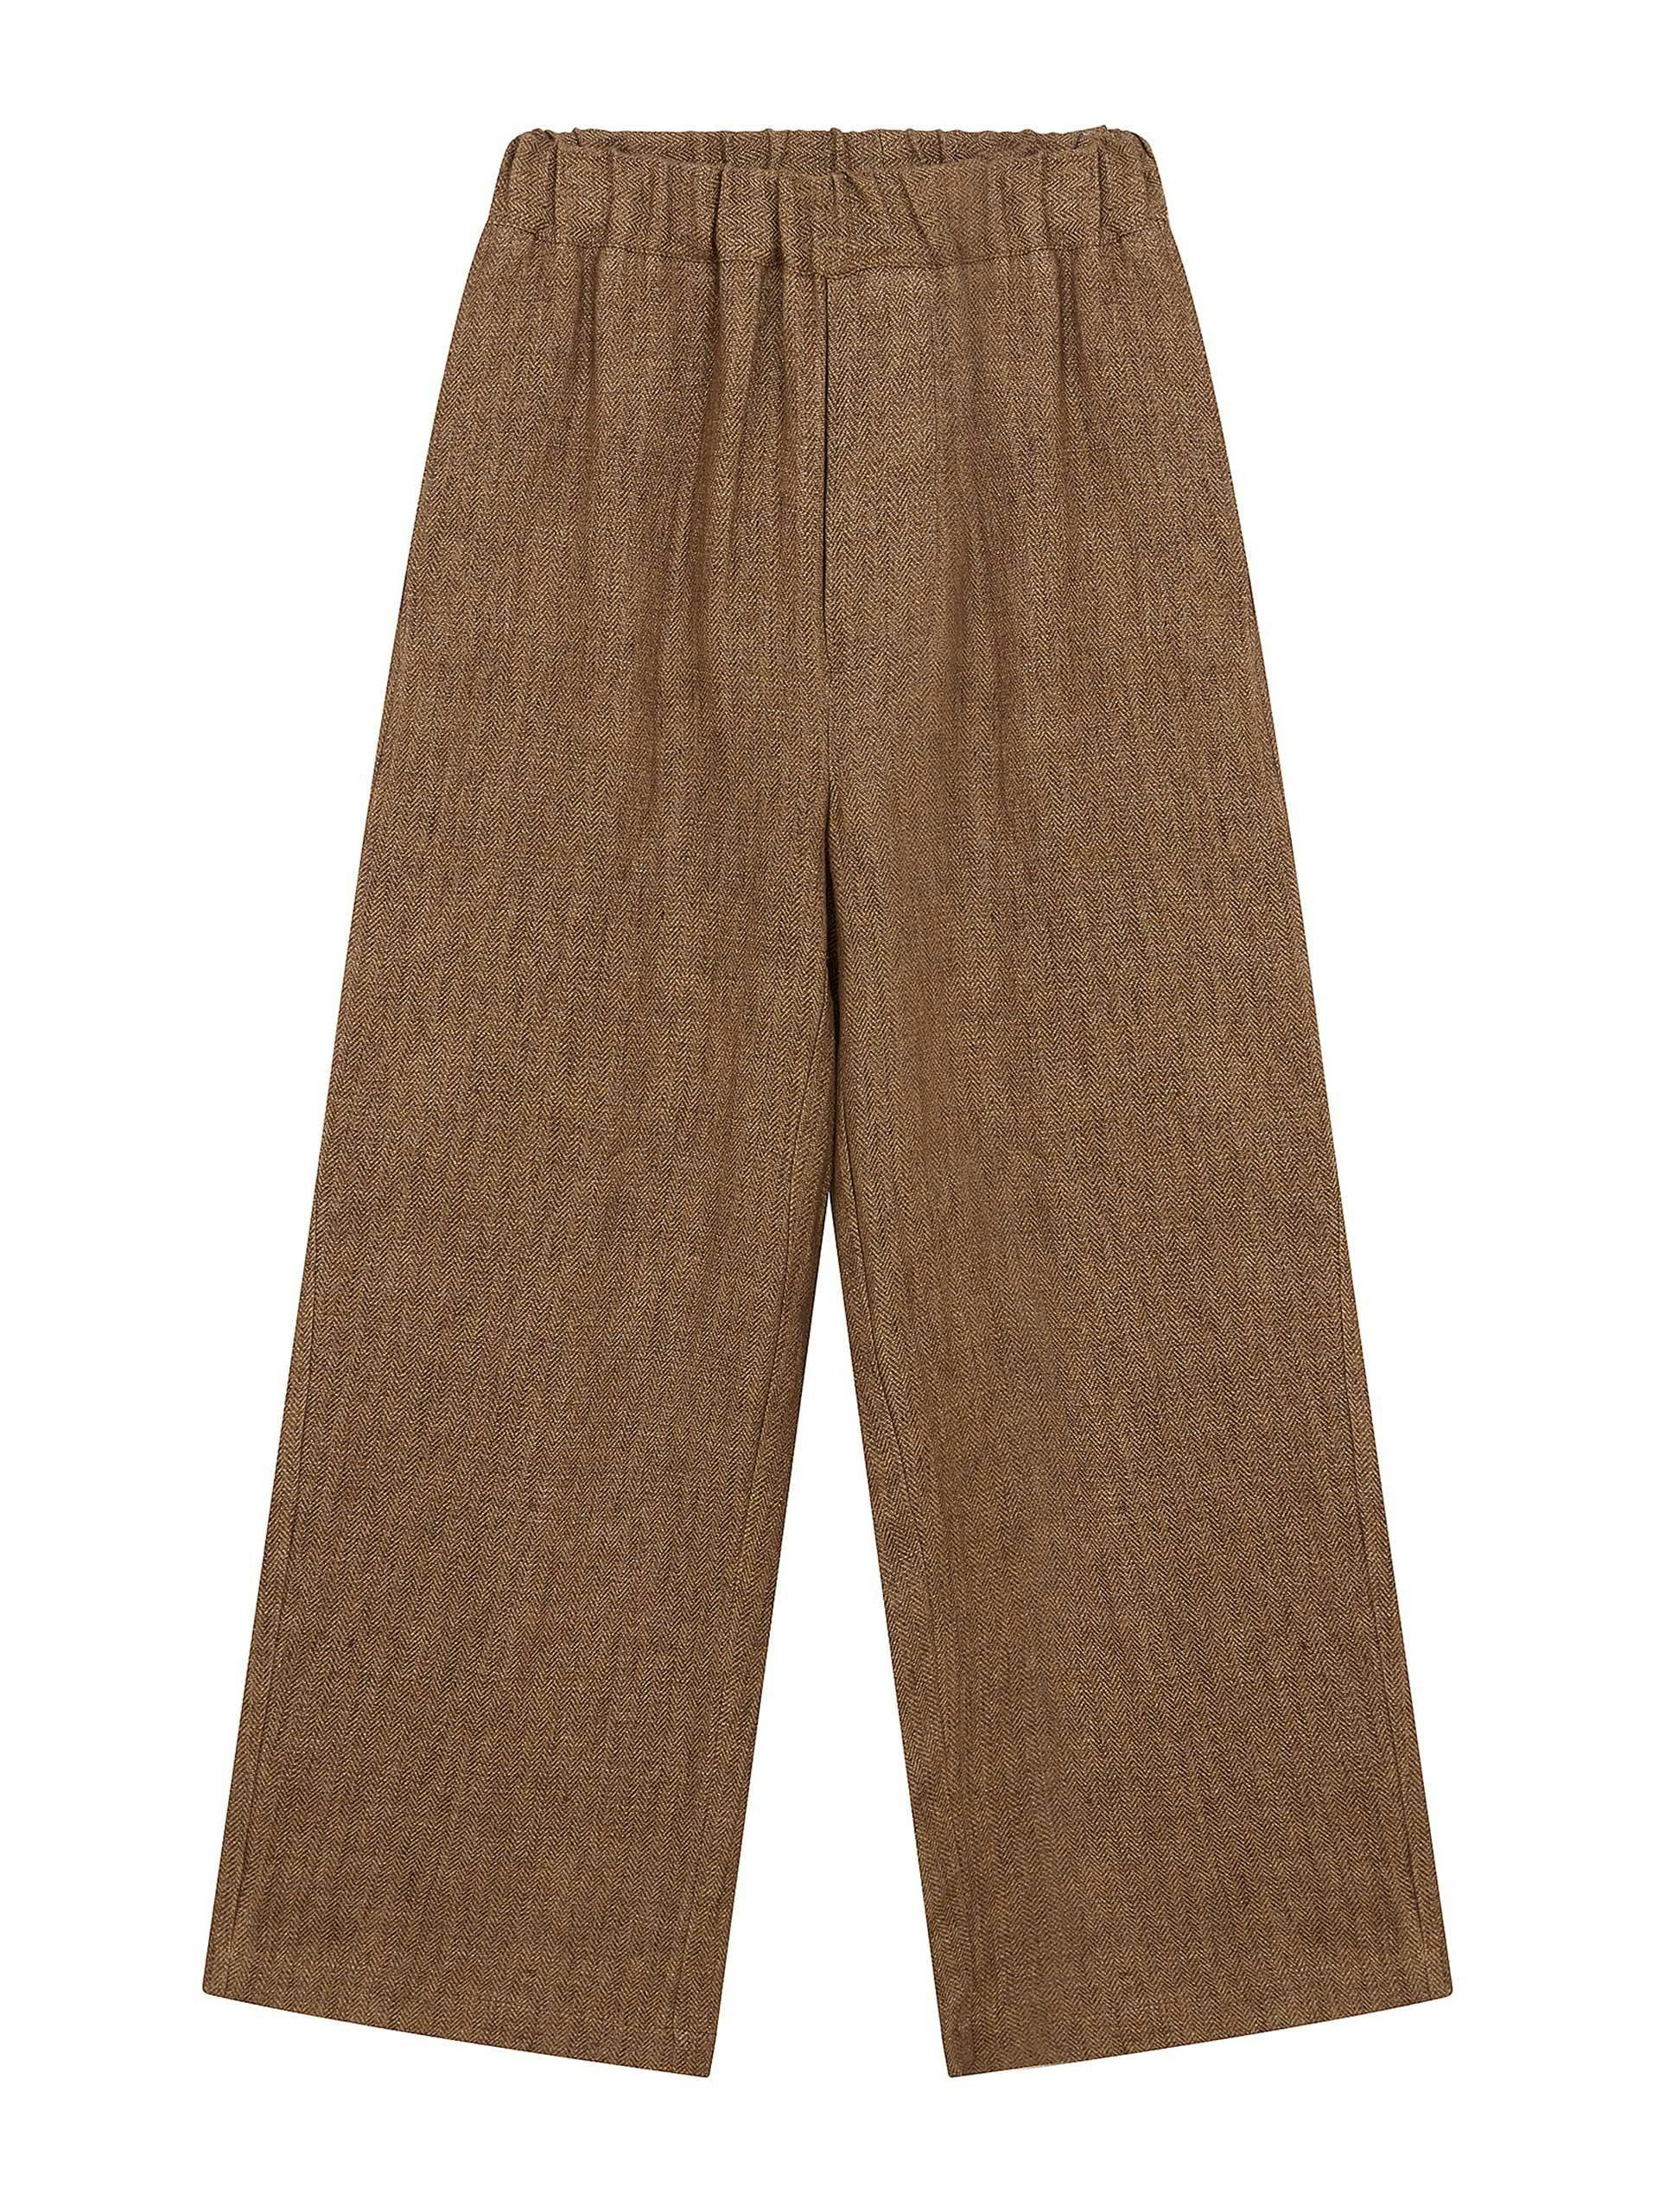 Taupe linen pants in a soft herringbone tweed